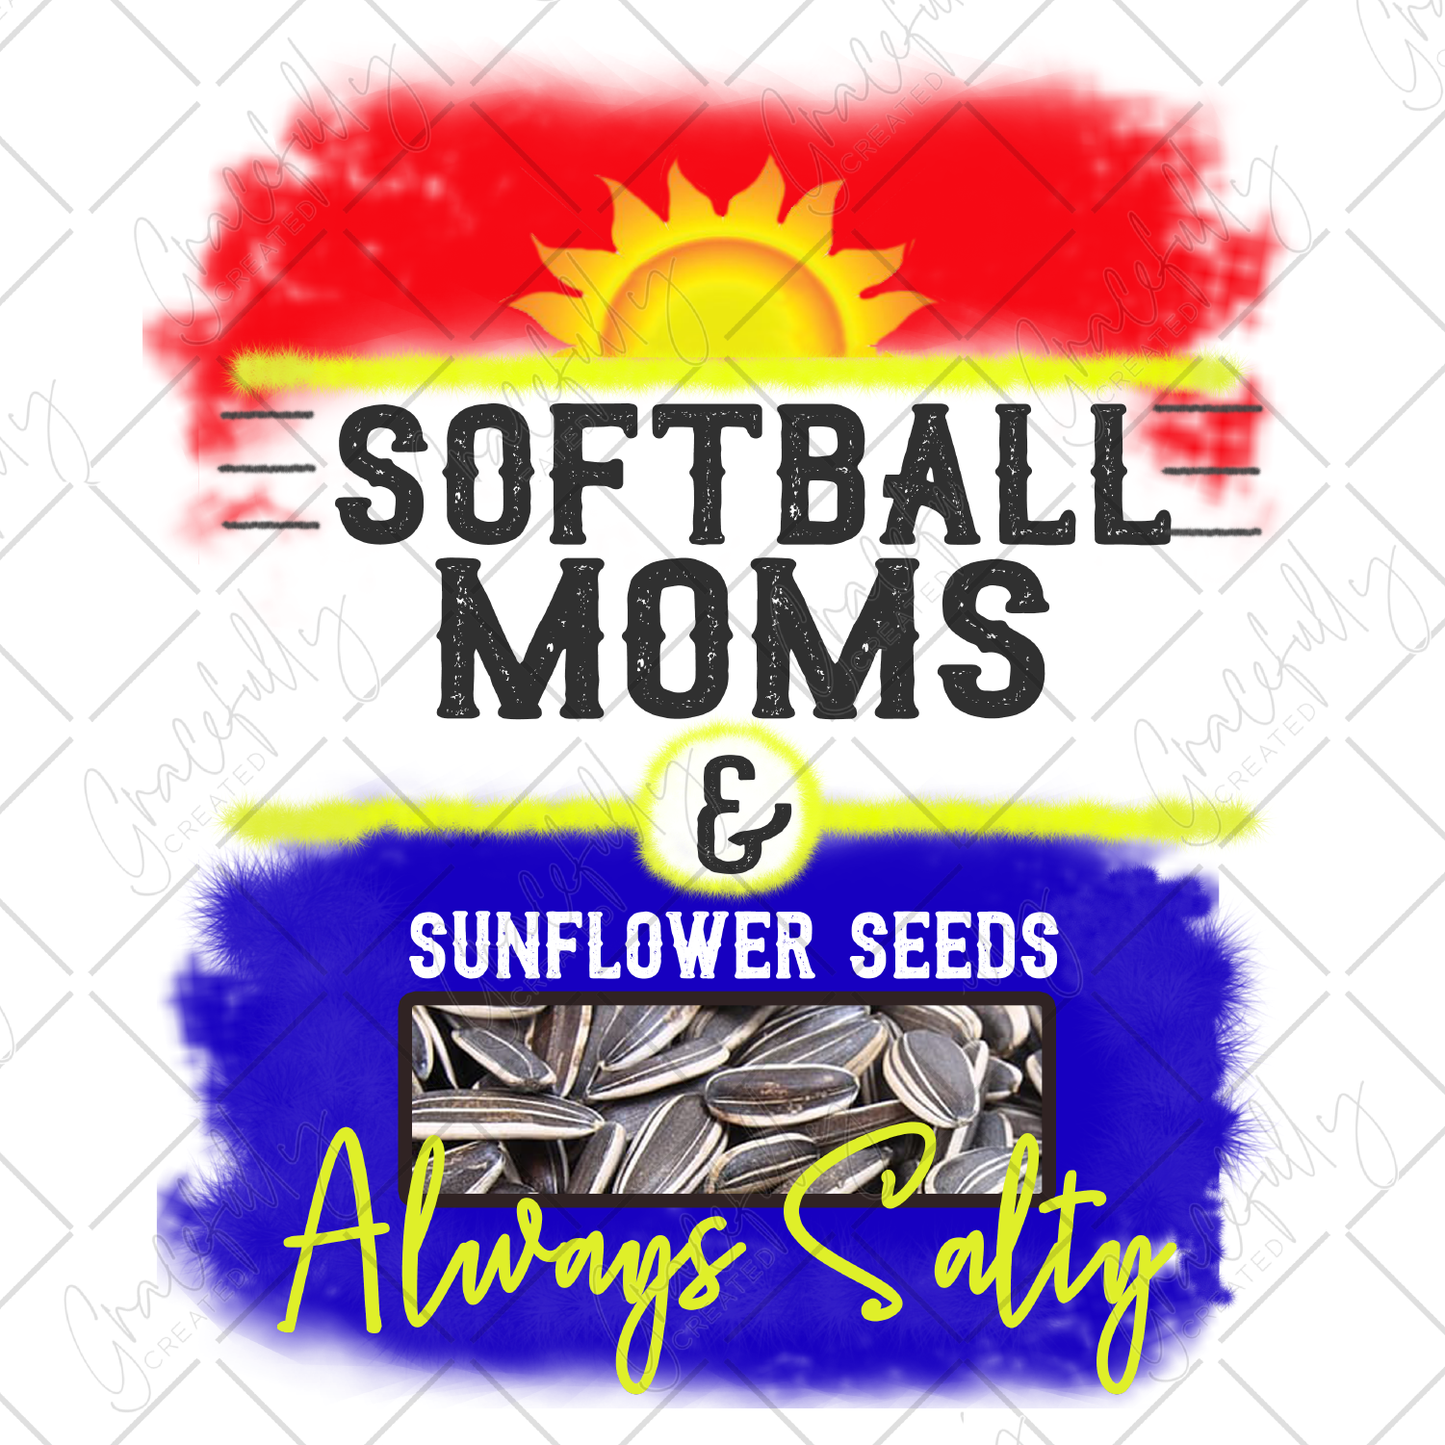 SS7 Softball Moms and Sunflower Seeds